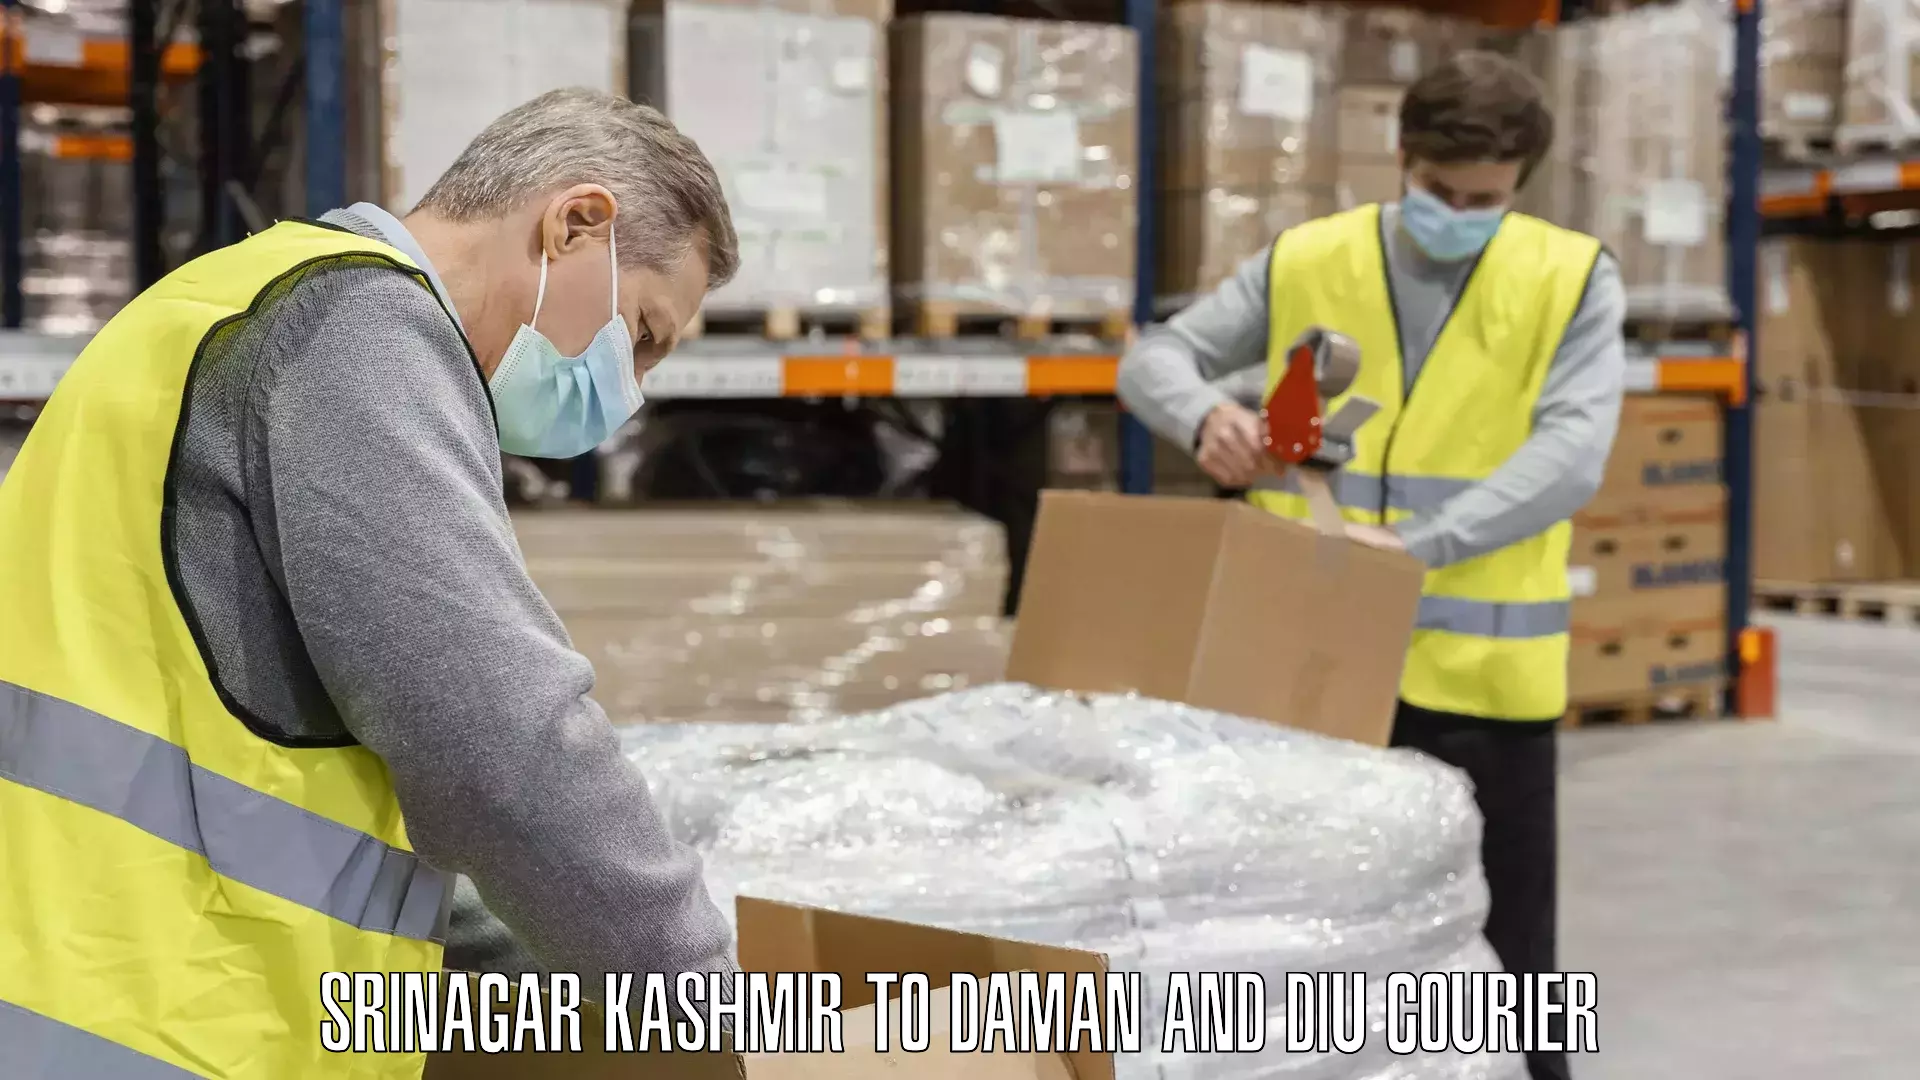 Baggage shipping experts Srinagar Kashmir to Daman and Diu